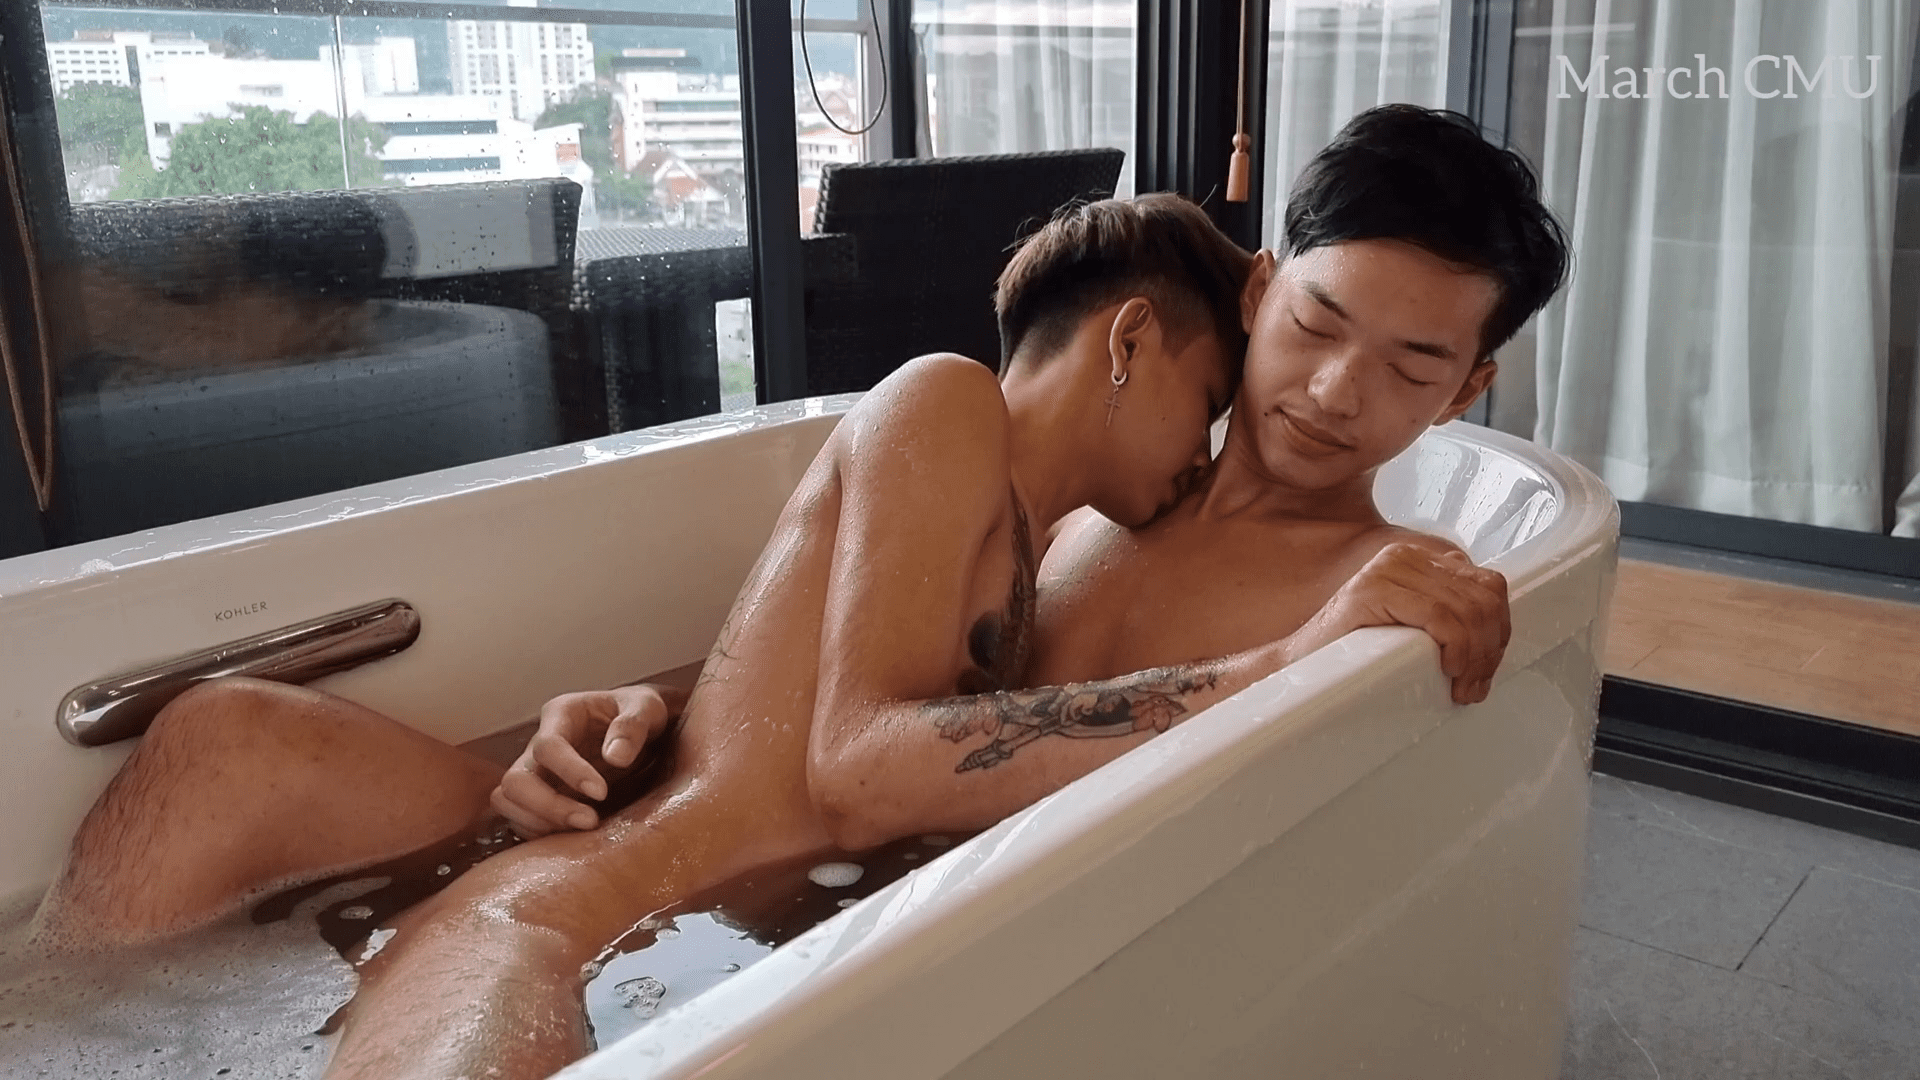 SEX GAY JAPAN Free gay porn sex site, japanese gay sex movies, gay sex hd, hurk channel, mens rush, straight sex, gay bareback,rape,bdsm, asian,chinese Trang 2 pic